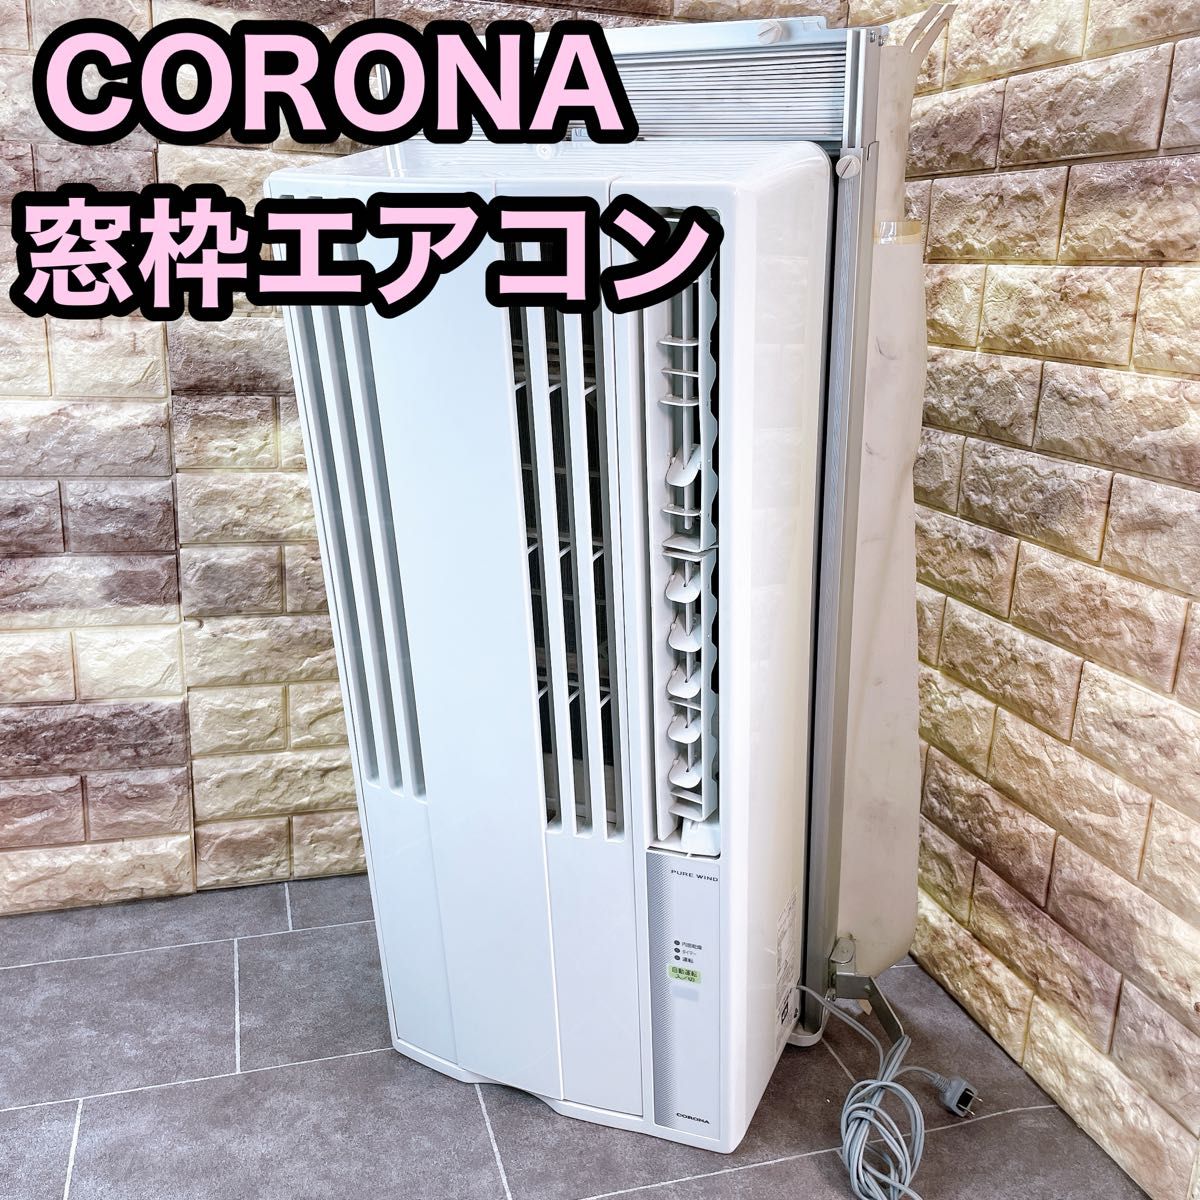 CORONA コロナ 窓用エアコン　CW-1620 ウインドエアコン